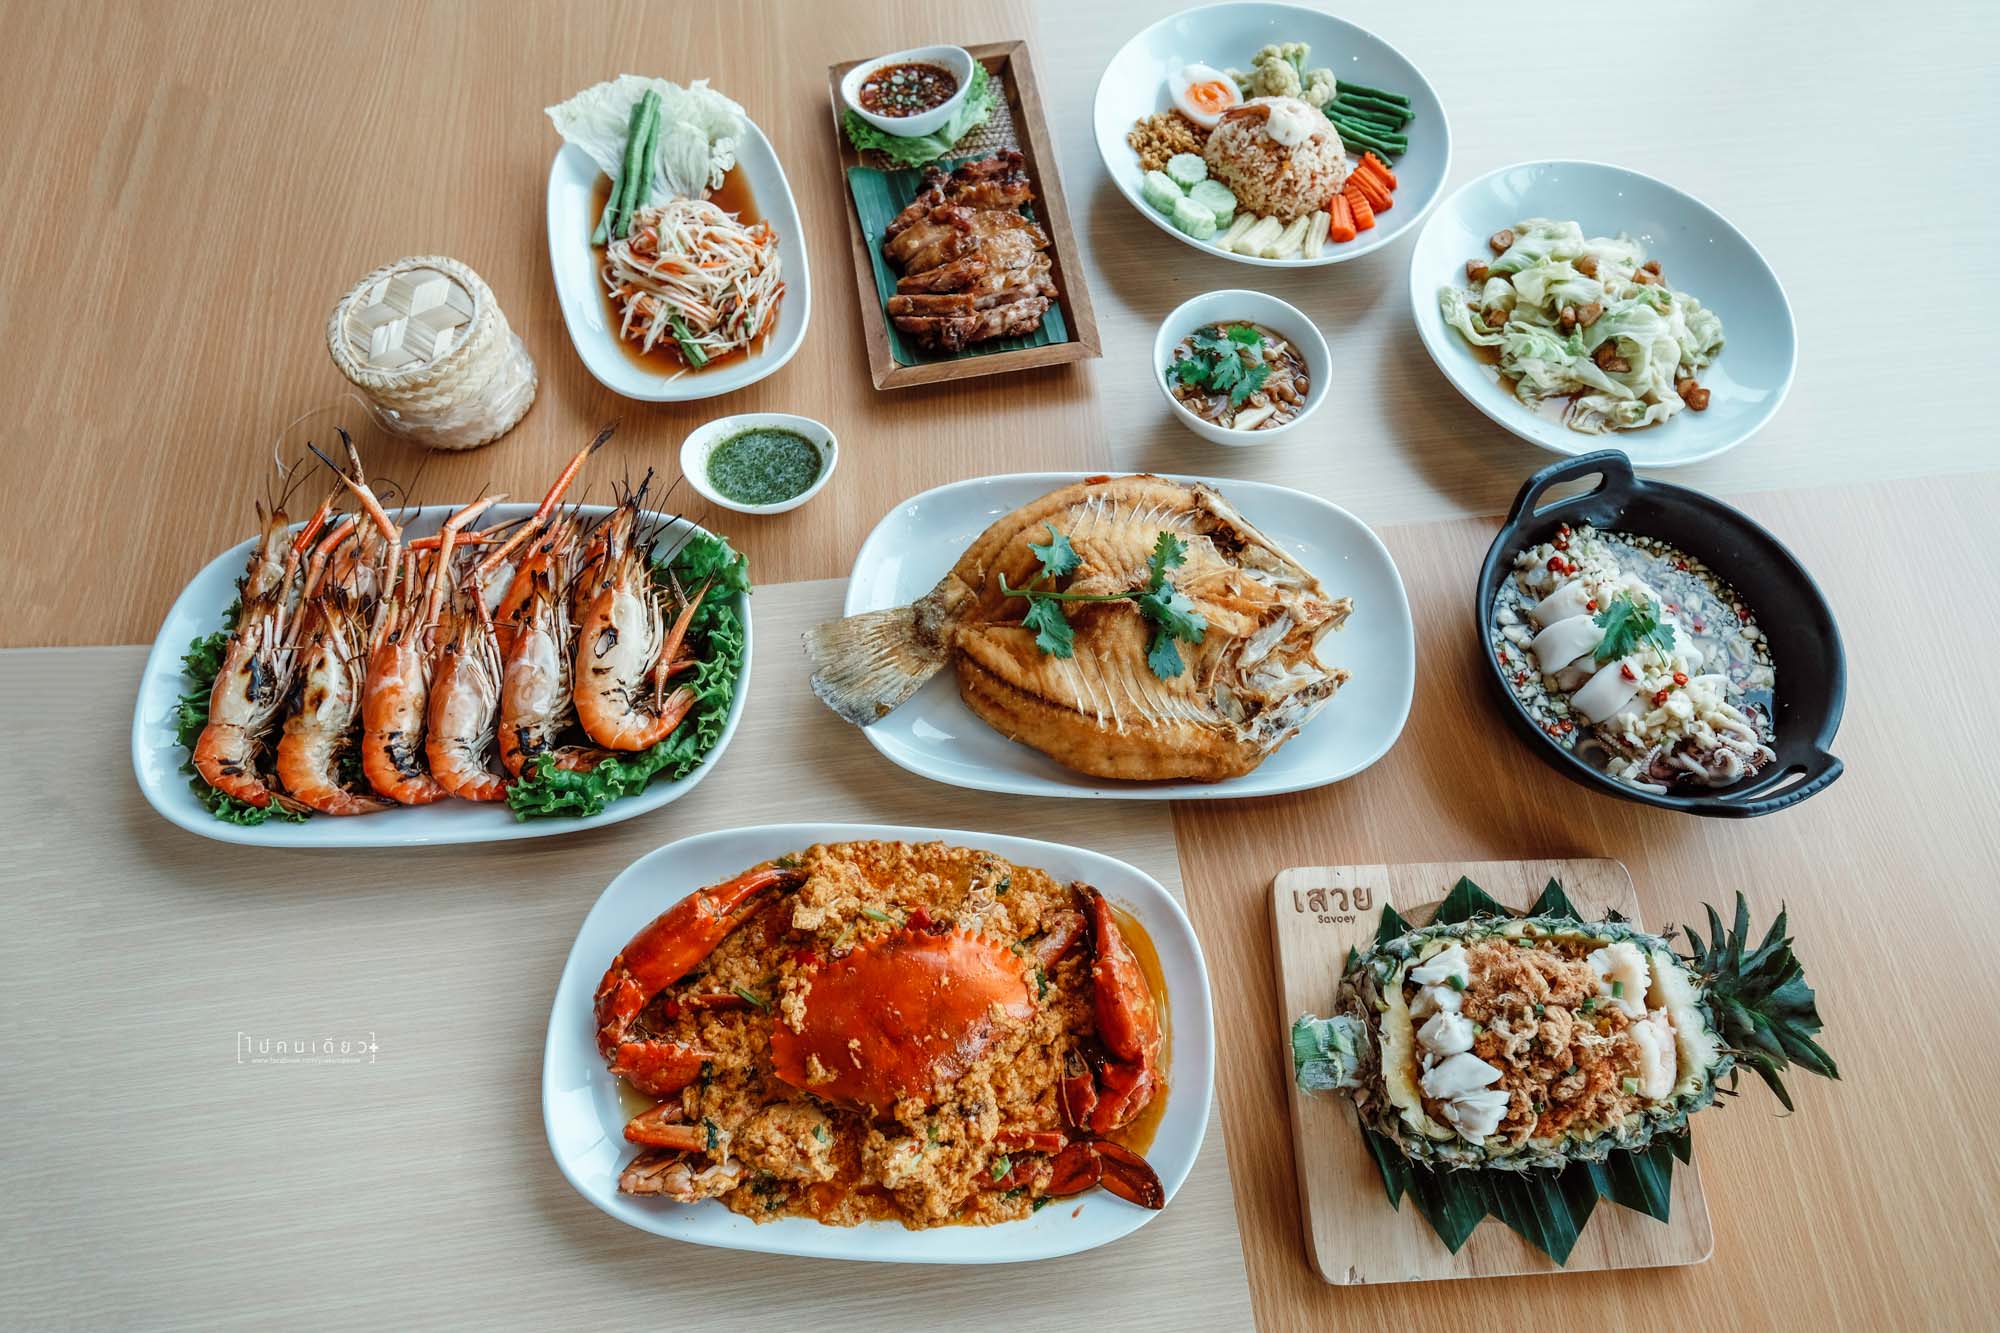 savoey, SavoeyRestaurant, savoeyseafood, thaifood, seafood, thaicuisine, Restaurant, Terminal21Asok, เสวย, ร้านอาหาร, อาหารไทย, ร้านเสวยซีฟู้ด, เทอมินอล21อโศก, เสวยซีฟู้ดเทอมินอล21อโศก